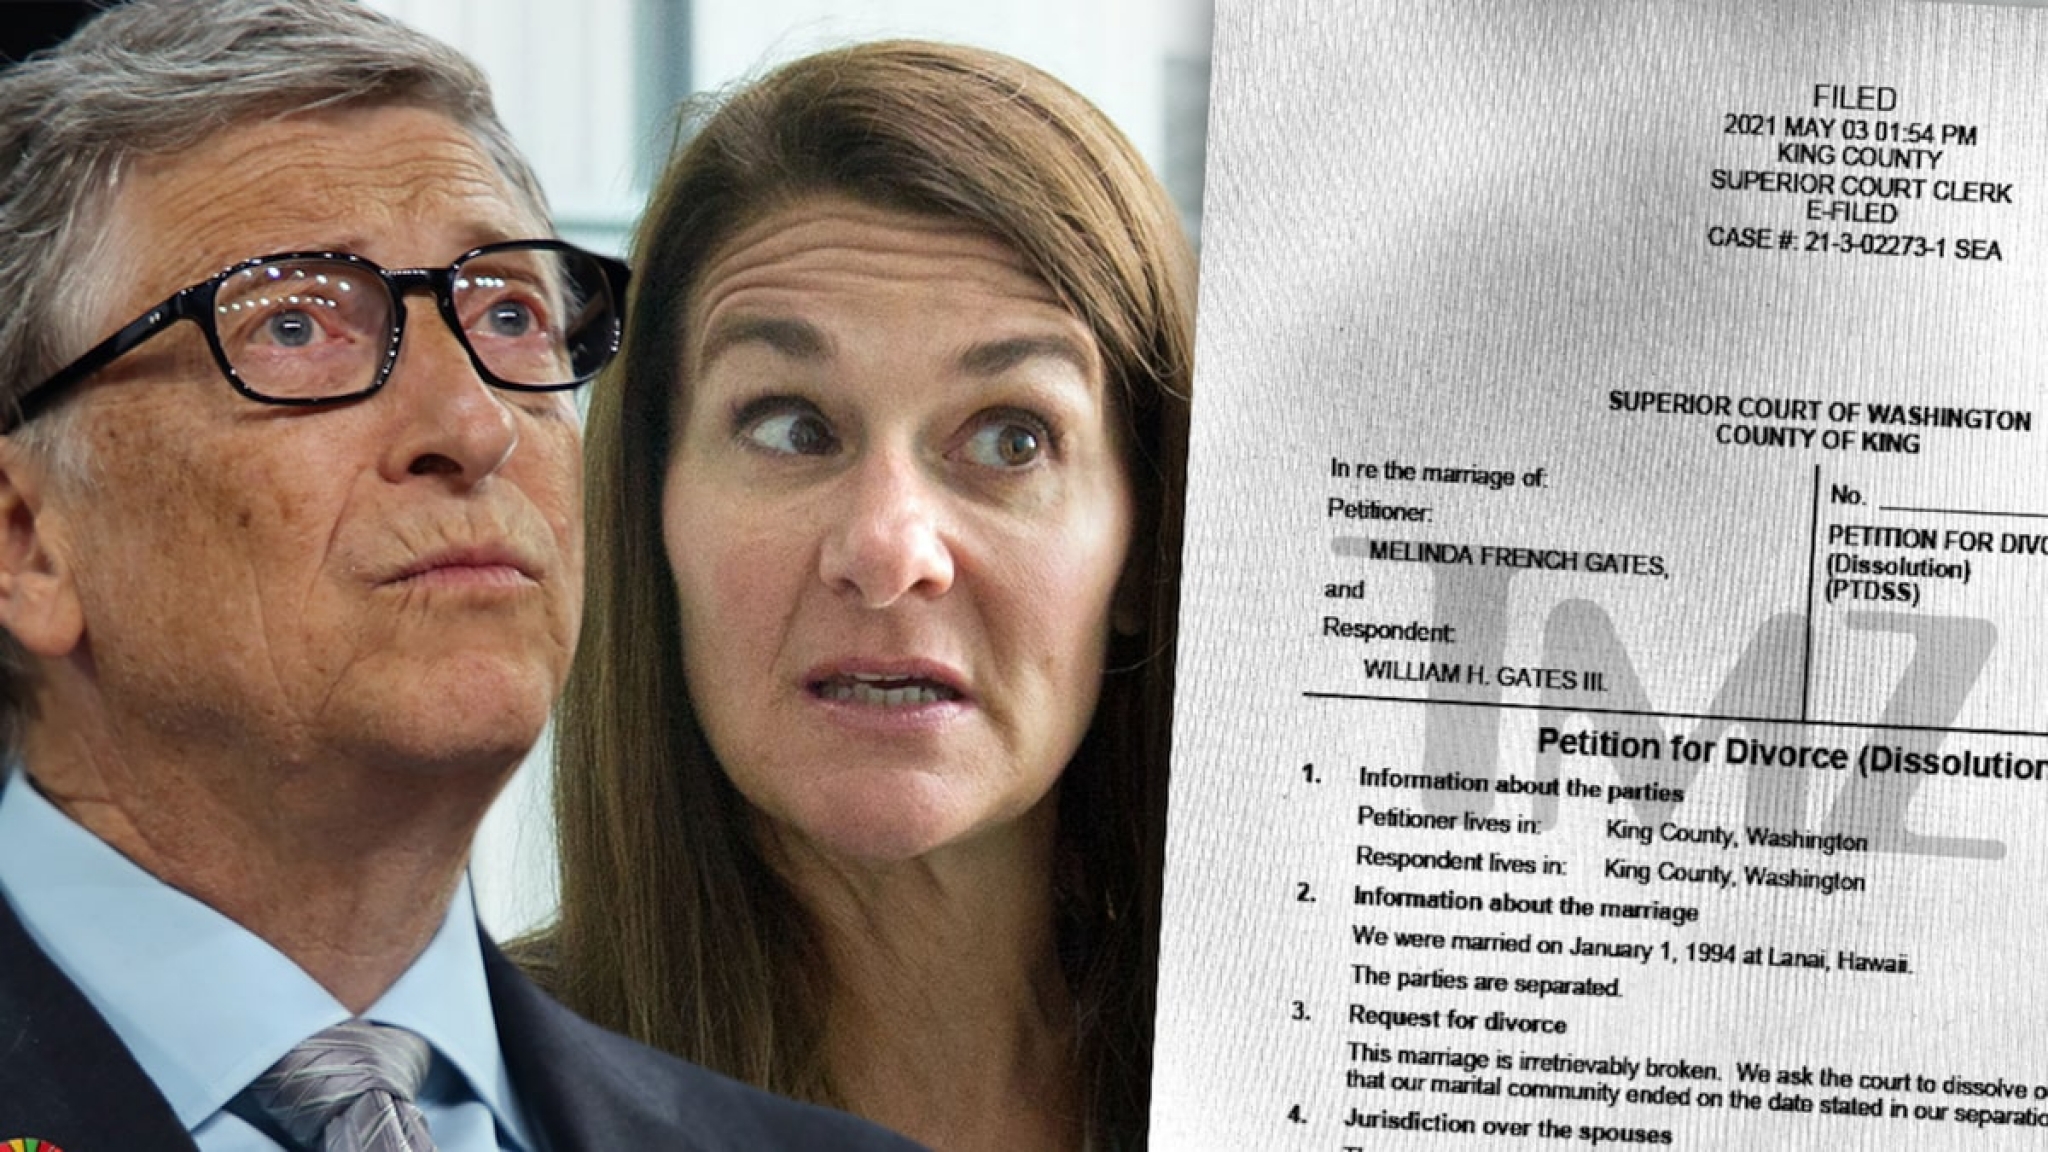 Bill and Melinda Gates File for Divorce and No Prenup